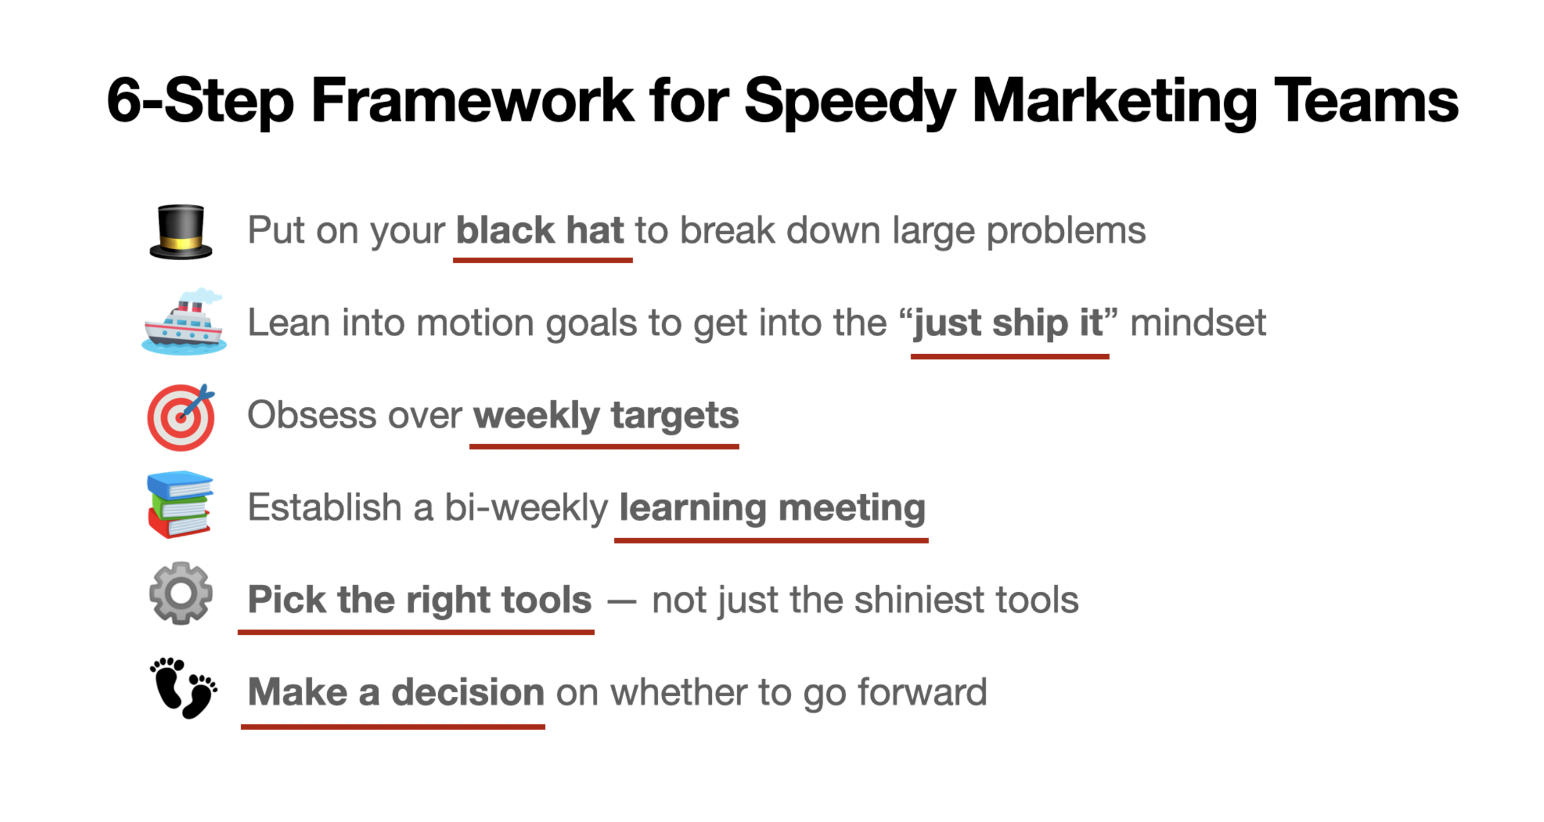 Framework for speedy marketing teams